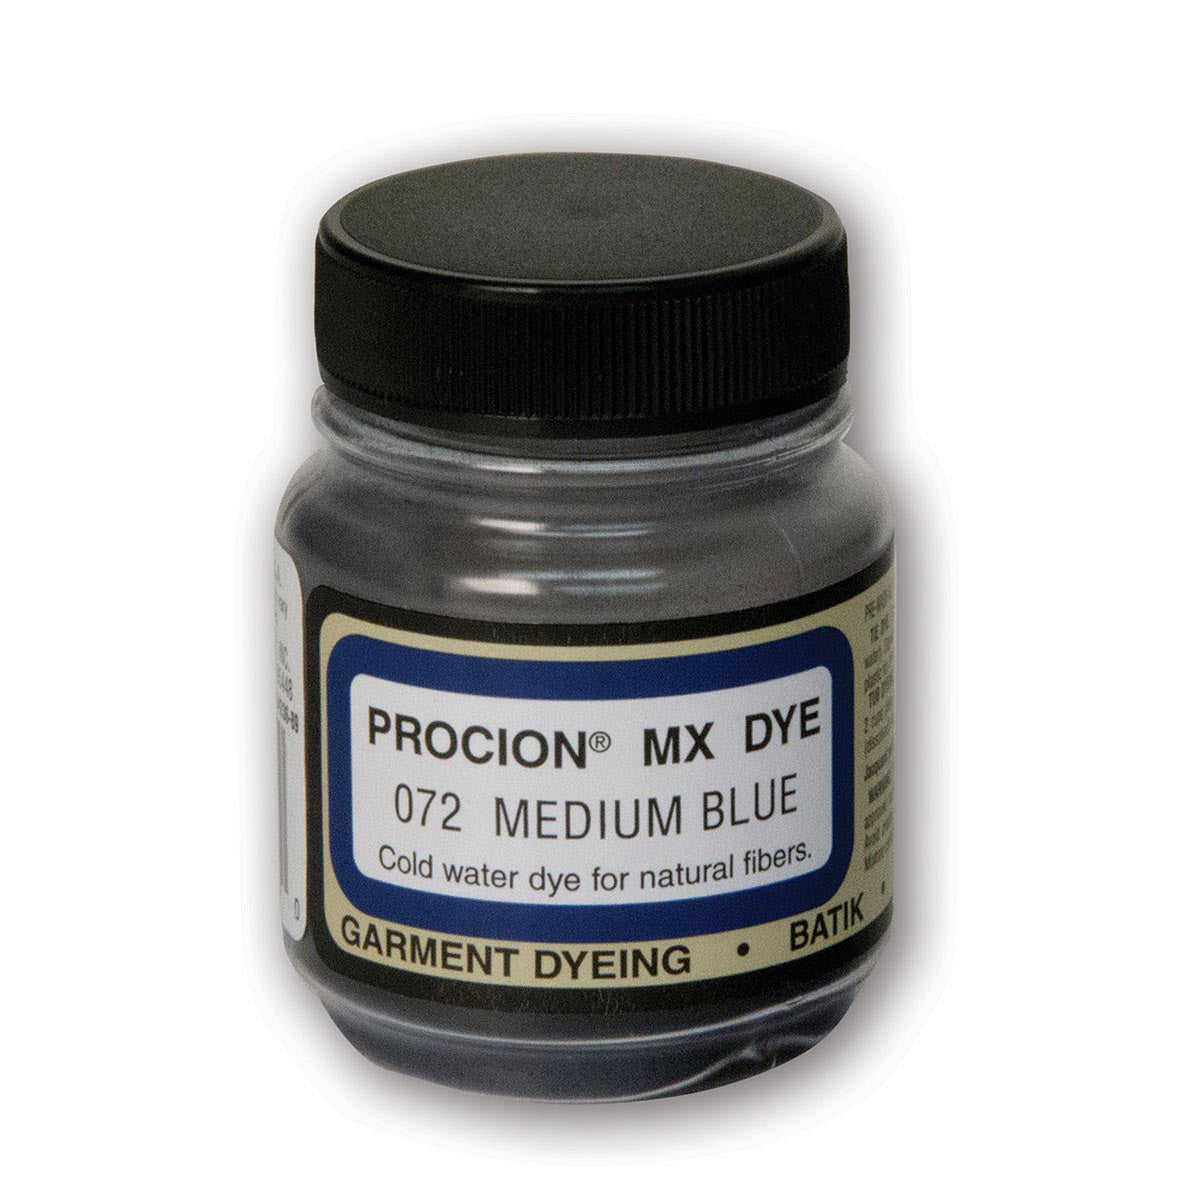 Jacquard - Procion MX Dye - Stoff Textil - Mittelblau 072